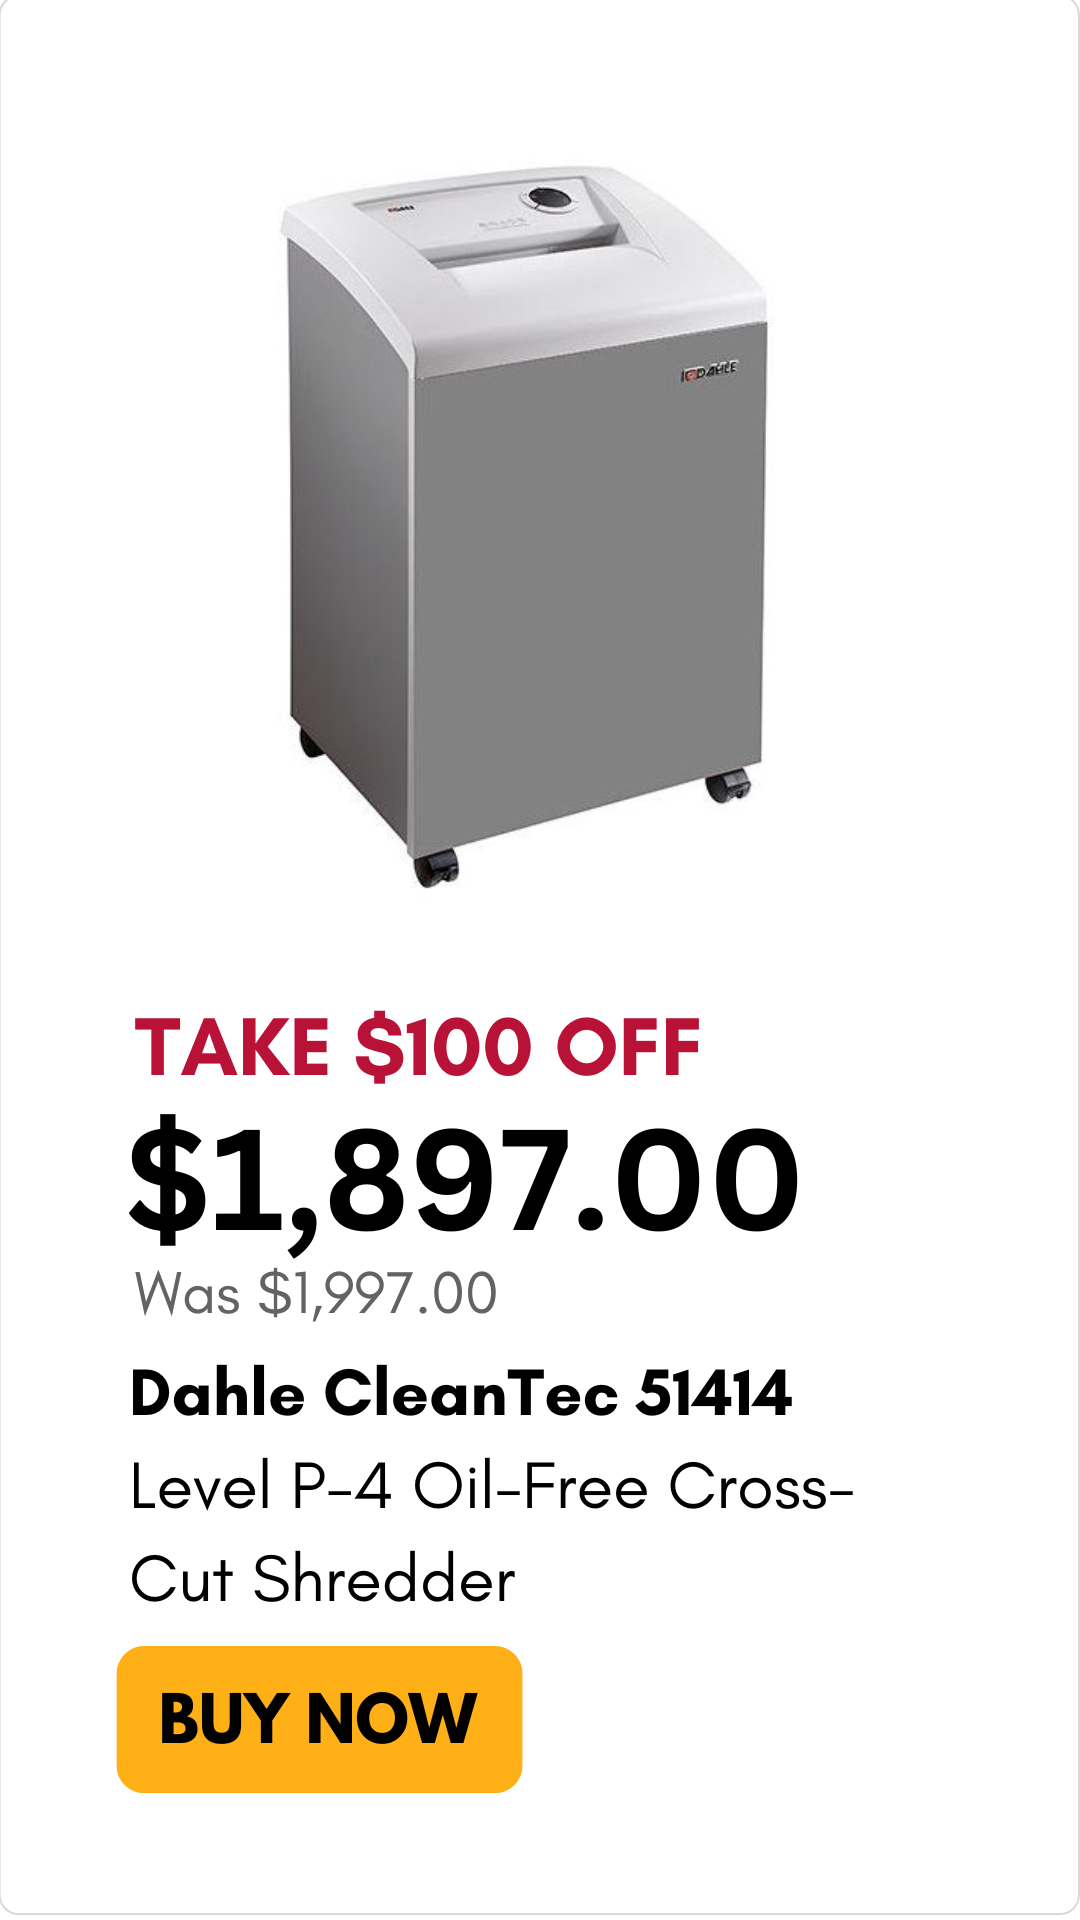 Dahle CleanTec 51414 Level P-4 Oil-Free Cross-Cut Shredder on sale for $100 off on MyBinding.com